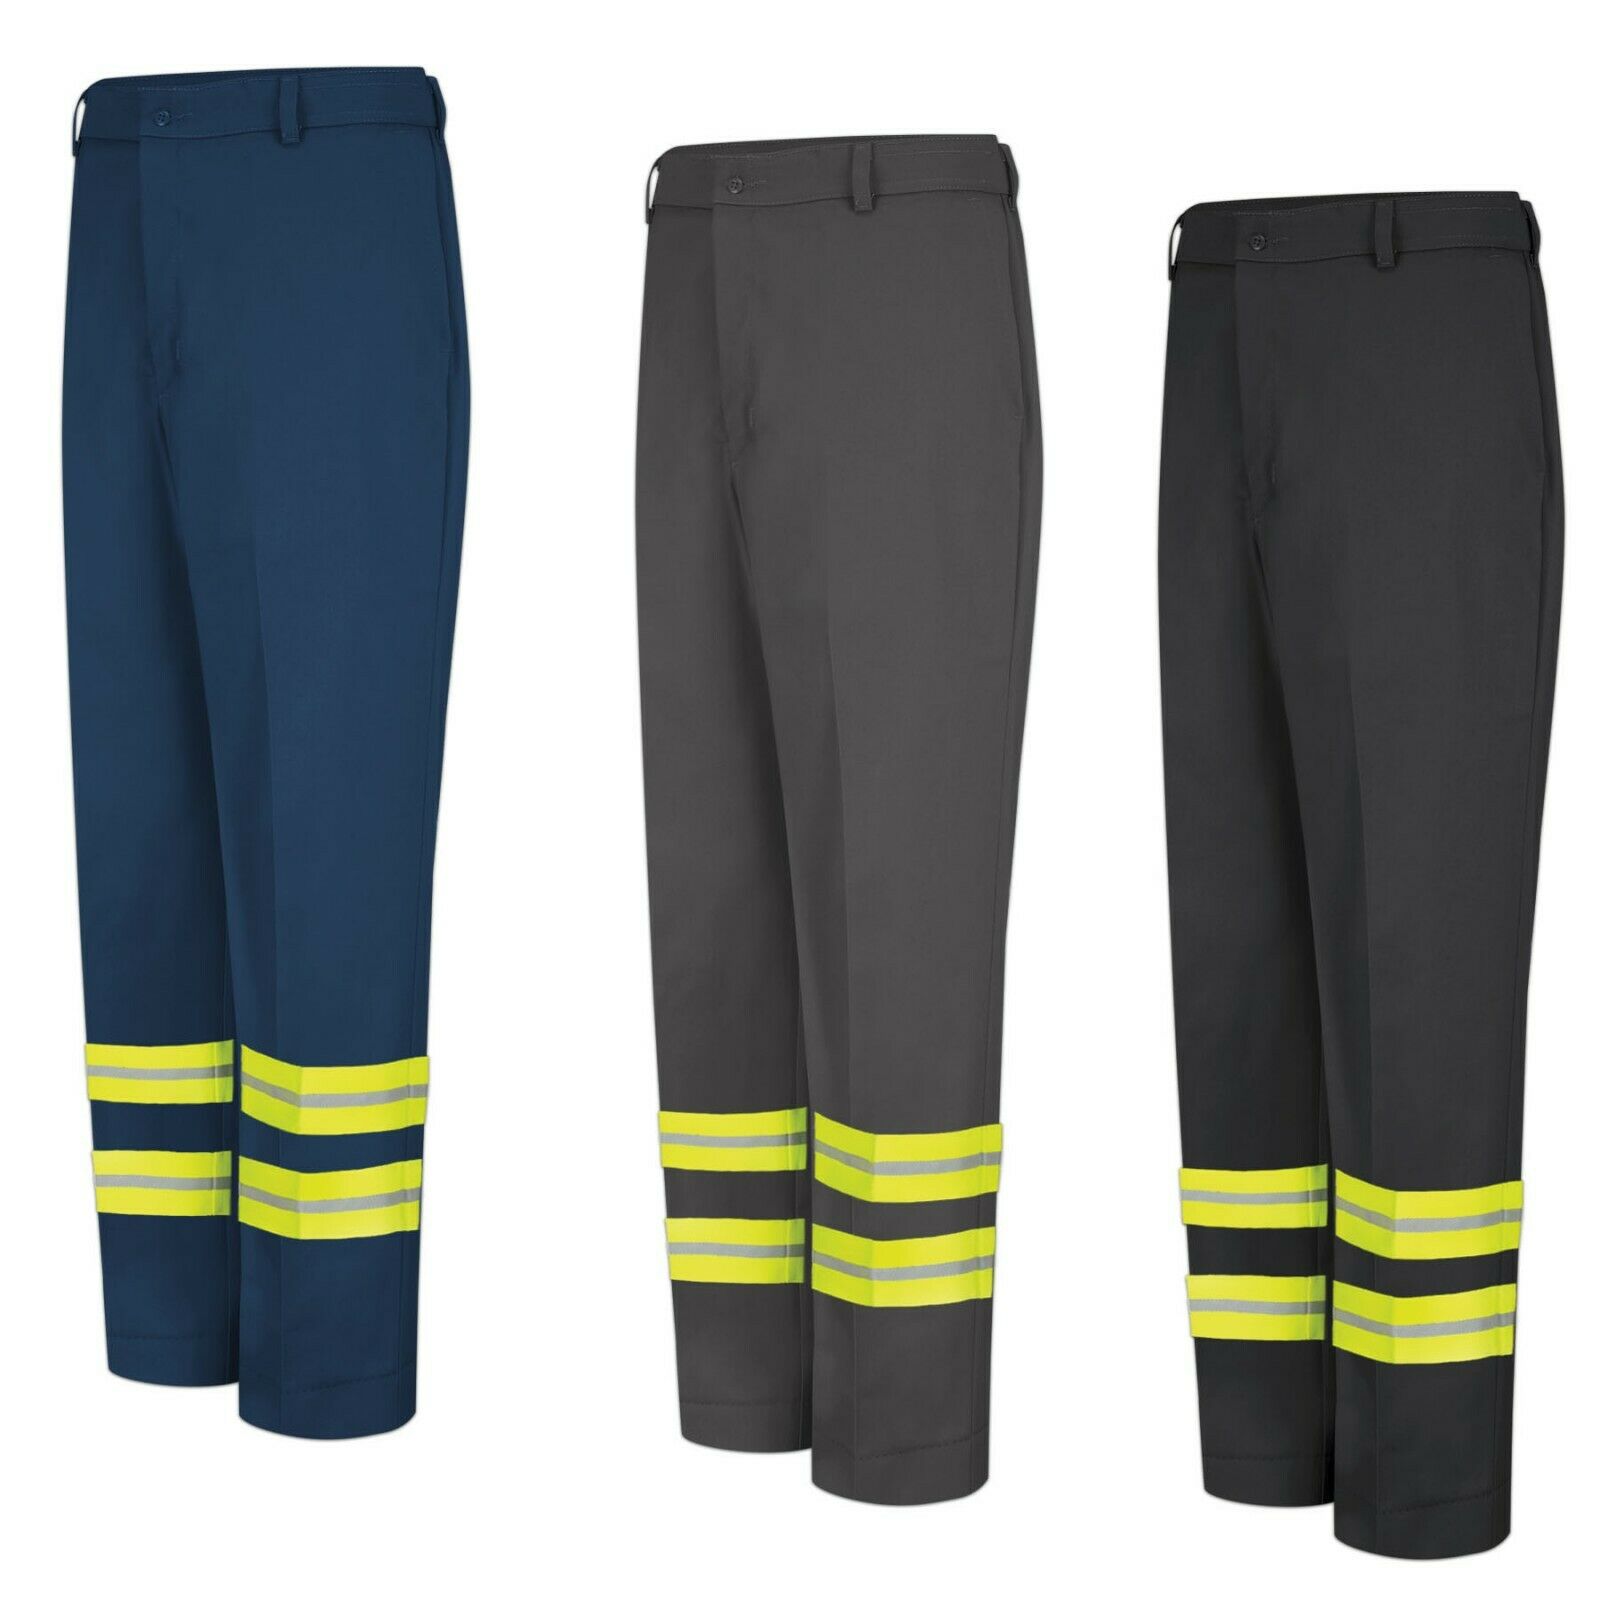 Red Kap Reflective Pants Enhanced Visibility Safety Towing Hi Vis Work Uniform